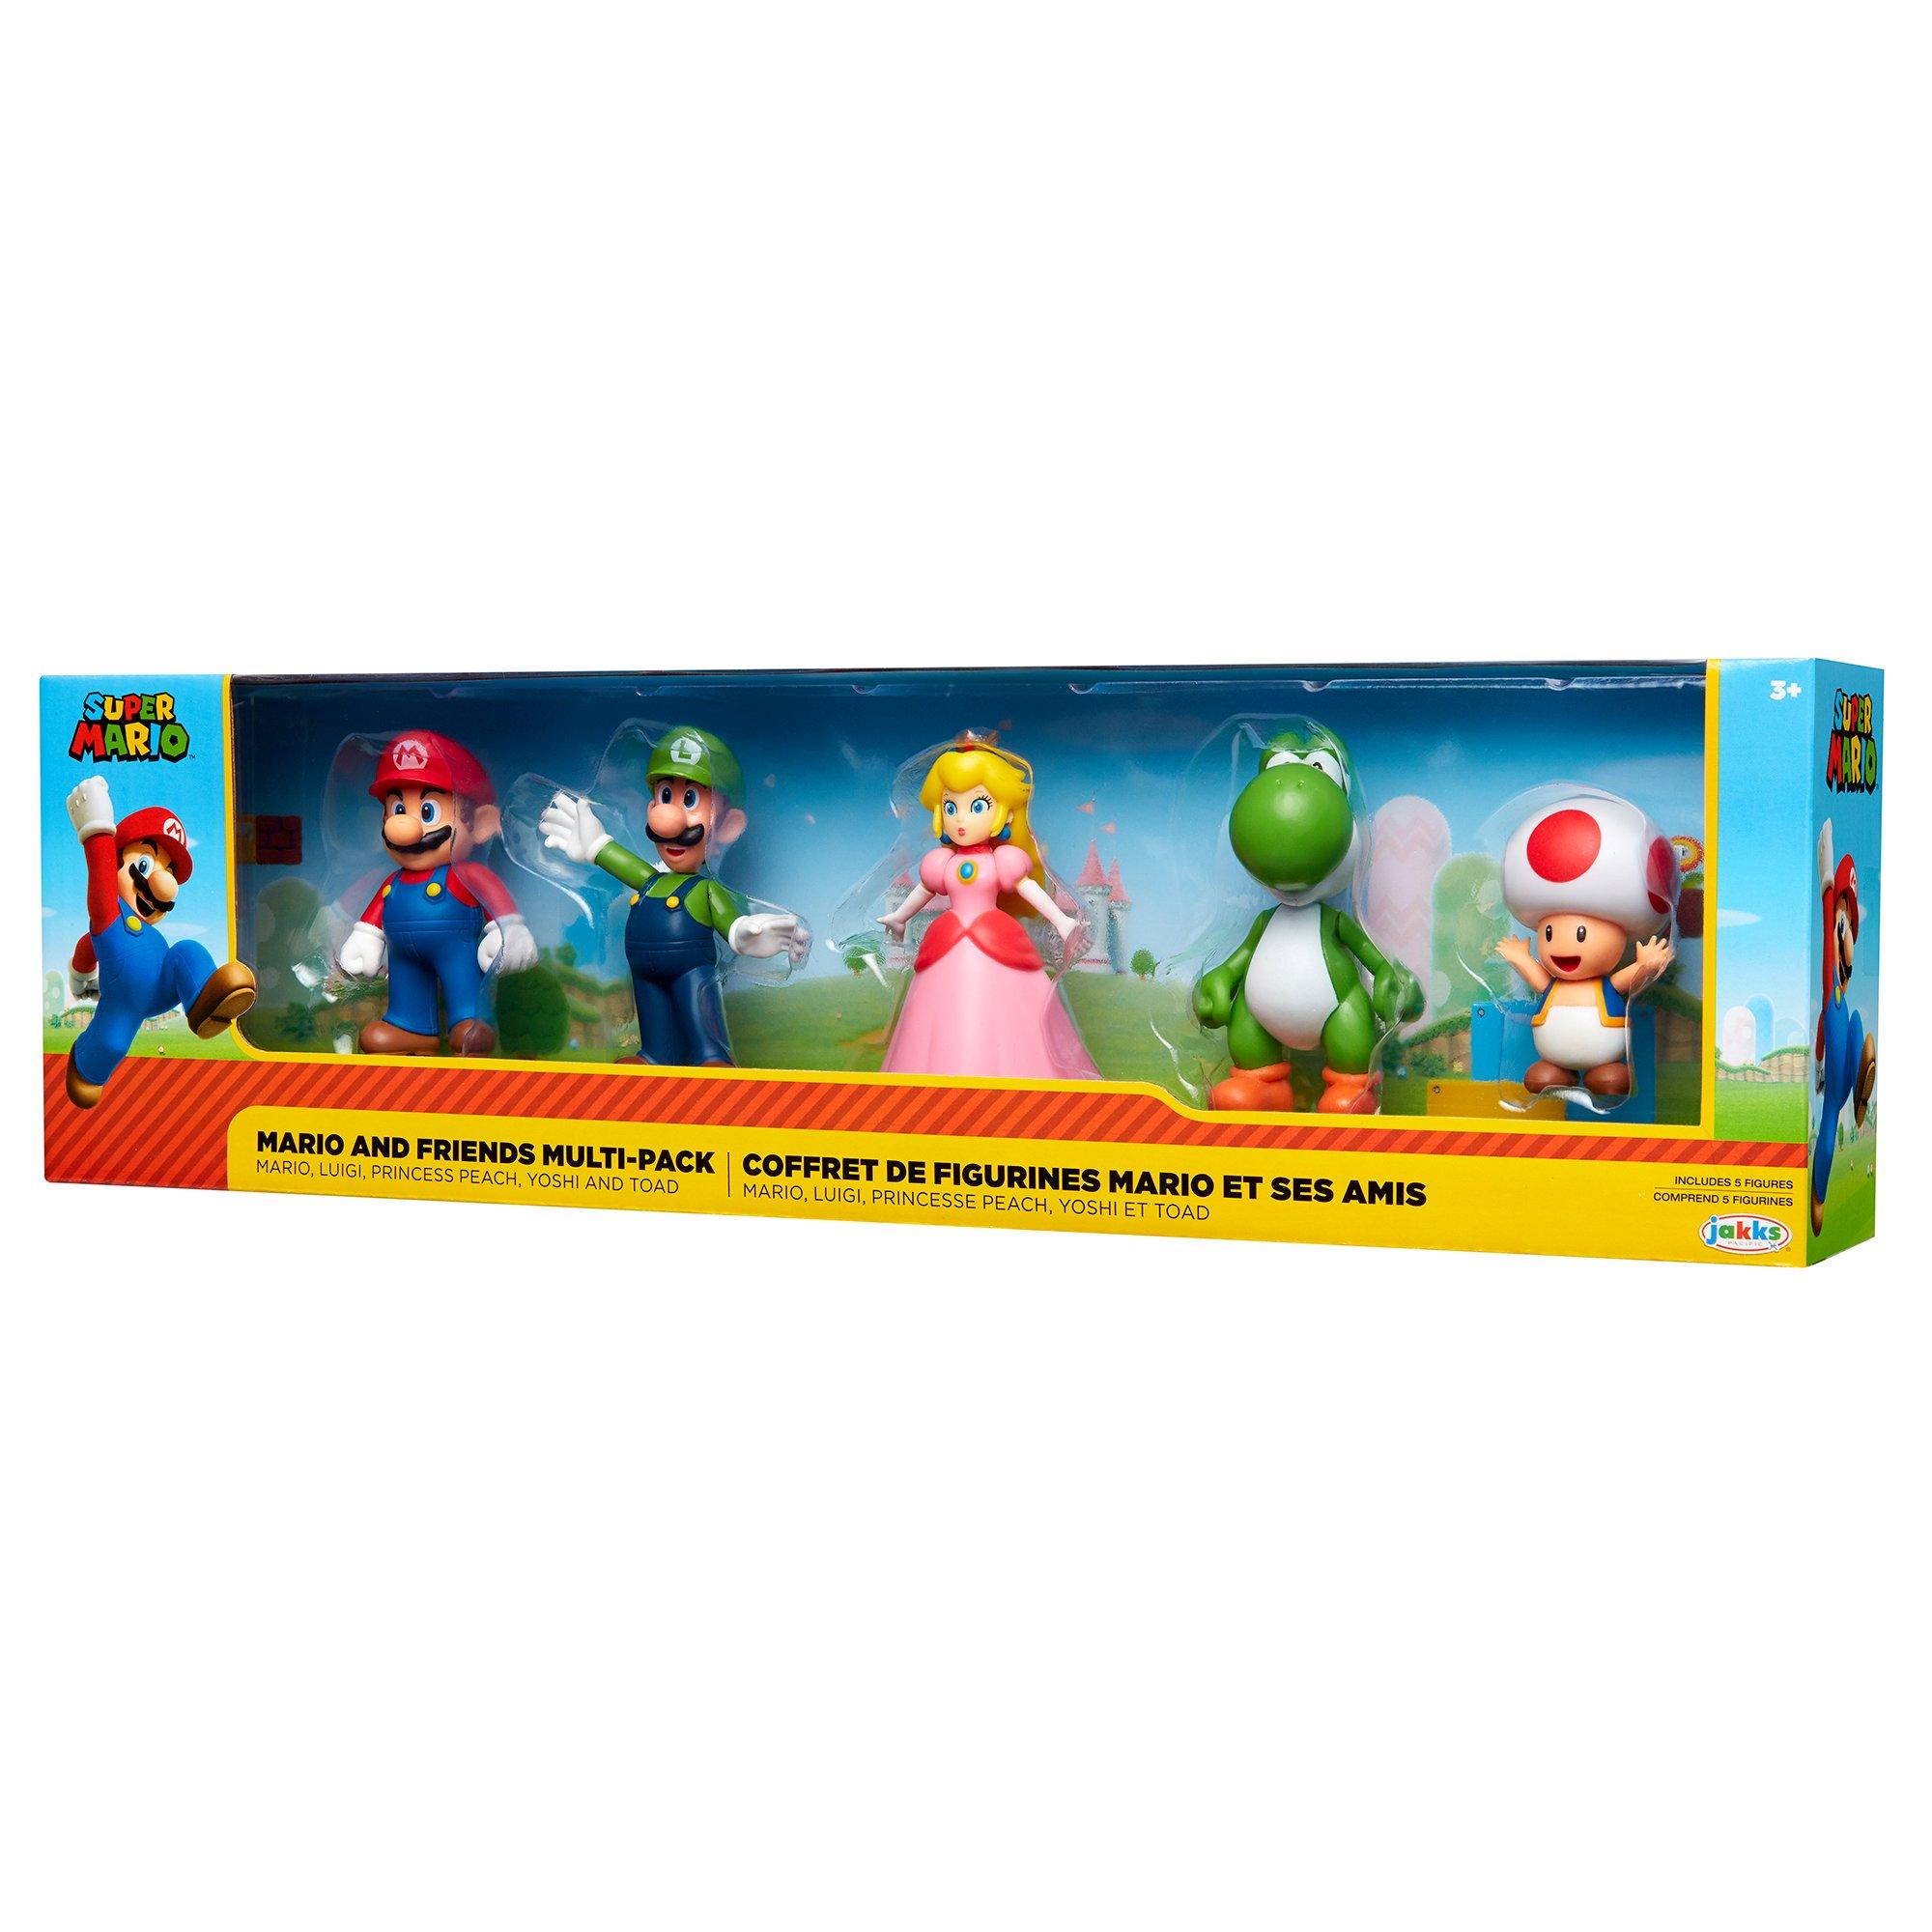 LEGO Super Mario - Character Packs/Series 4 : : Juguetes